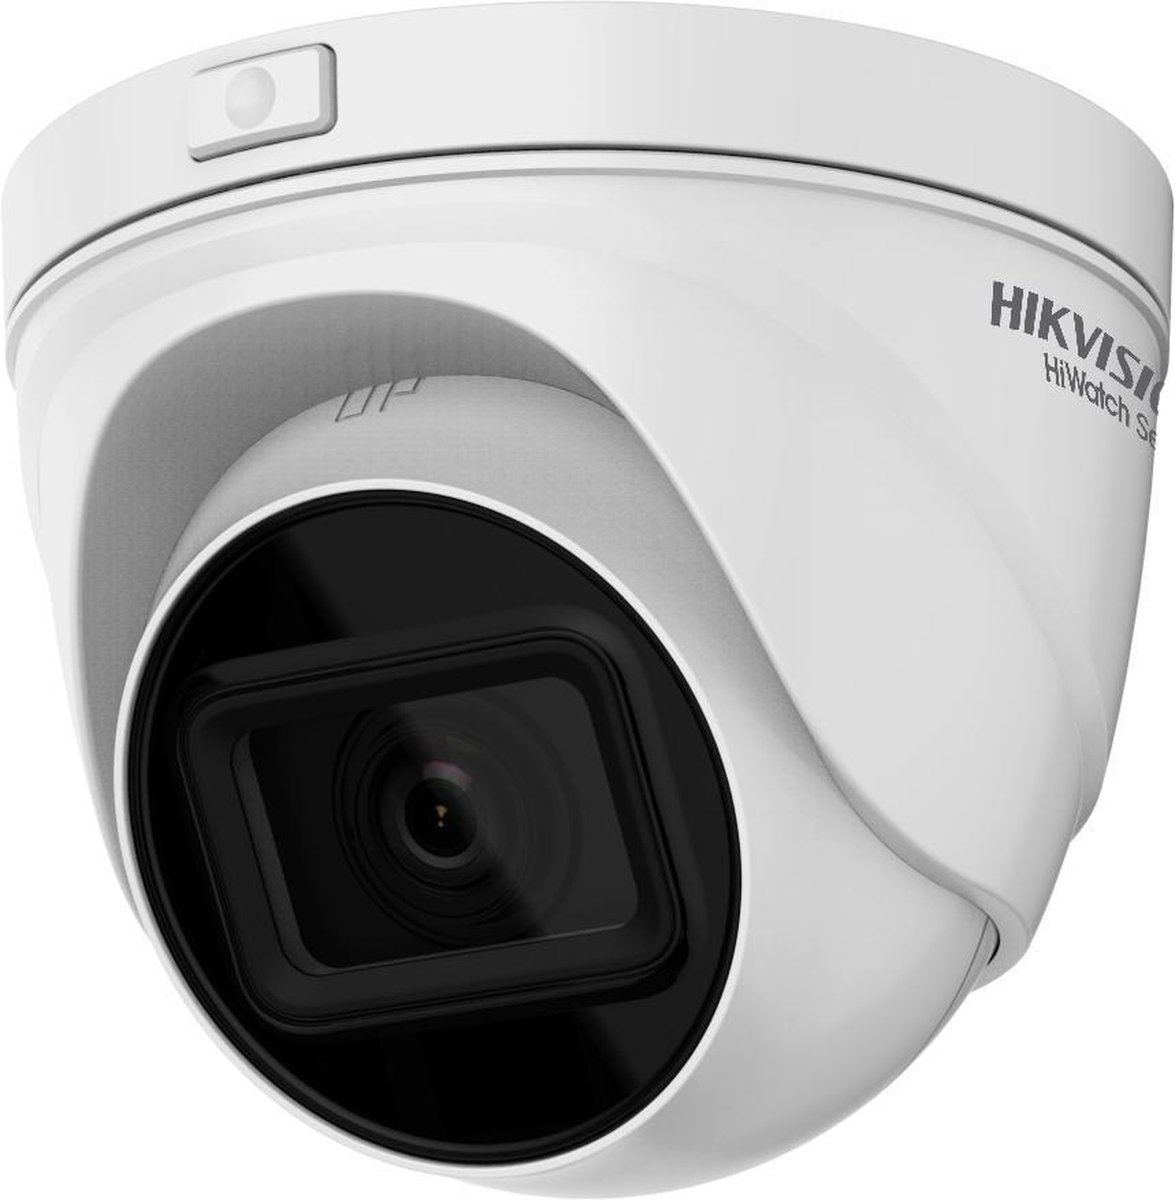 Hikvision HWI-T641H-Z HiWatch Full HD 4MP buiten eyeball met varifocale lens, IR nachtzicht, 120dB WDR, PoE - Beveiligingscamera IP camera bewakingscamera camerabewaking veiligheidscamera beveiliging netwerk camera webcam - Hikvision